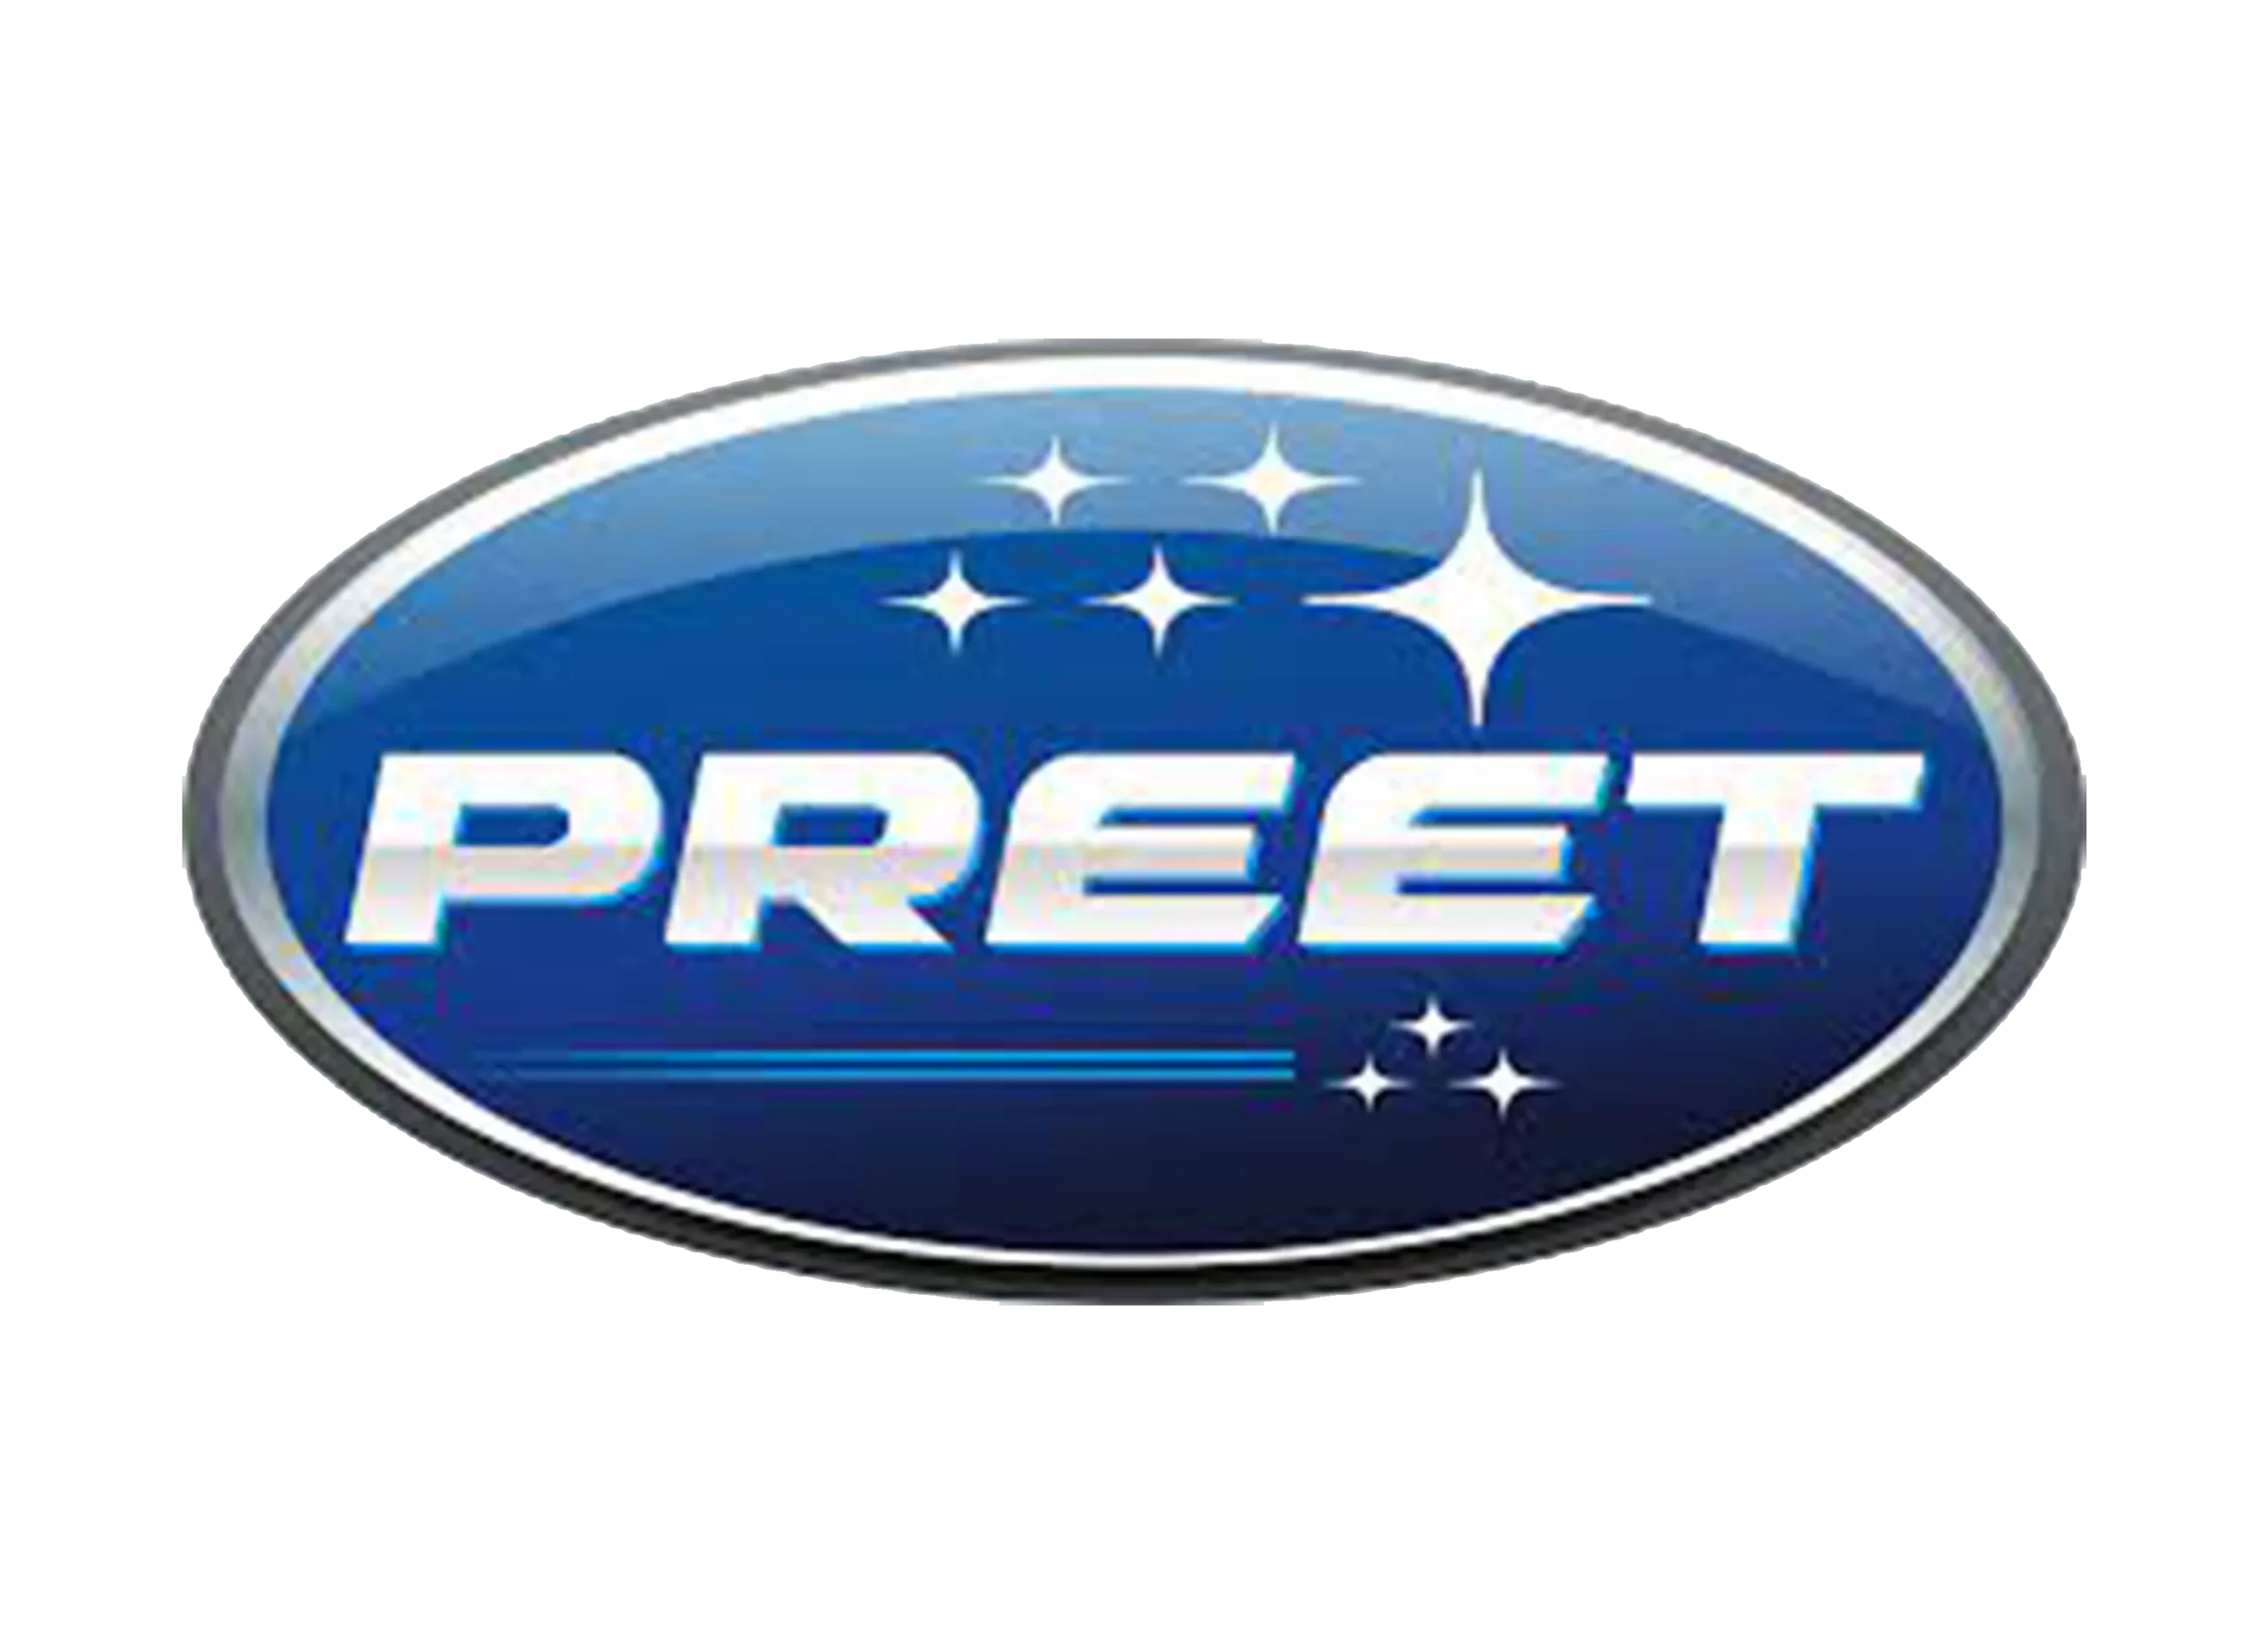 Preet logo present